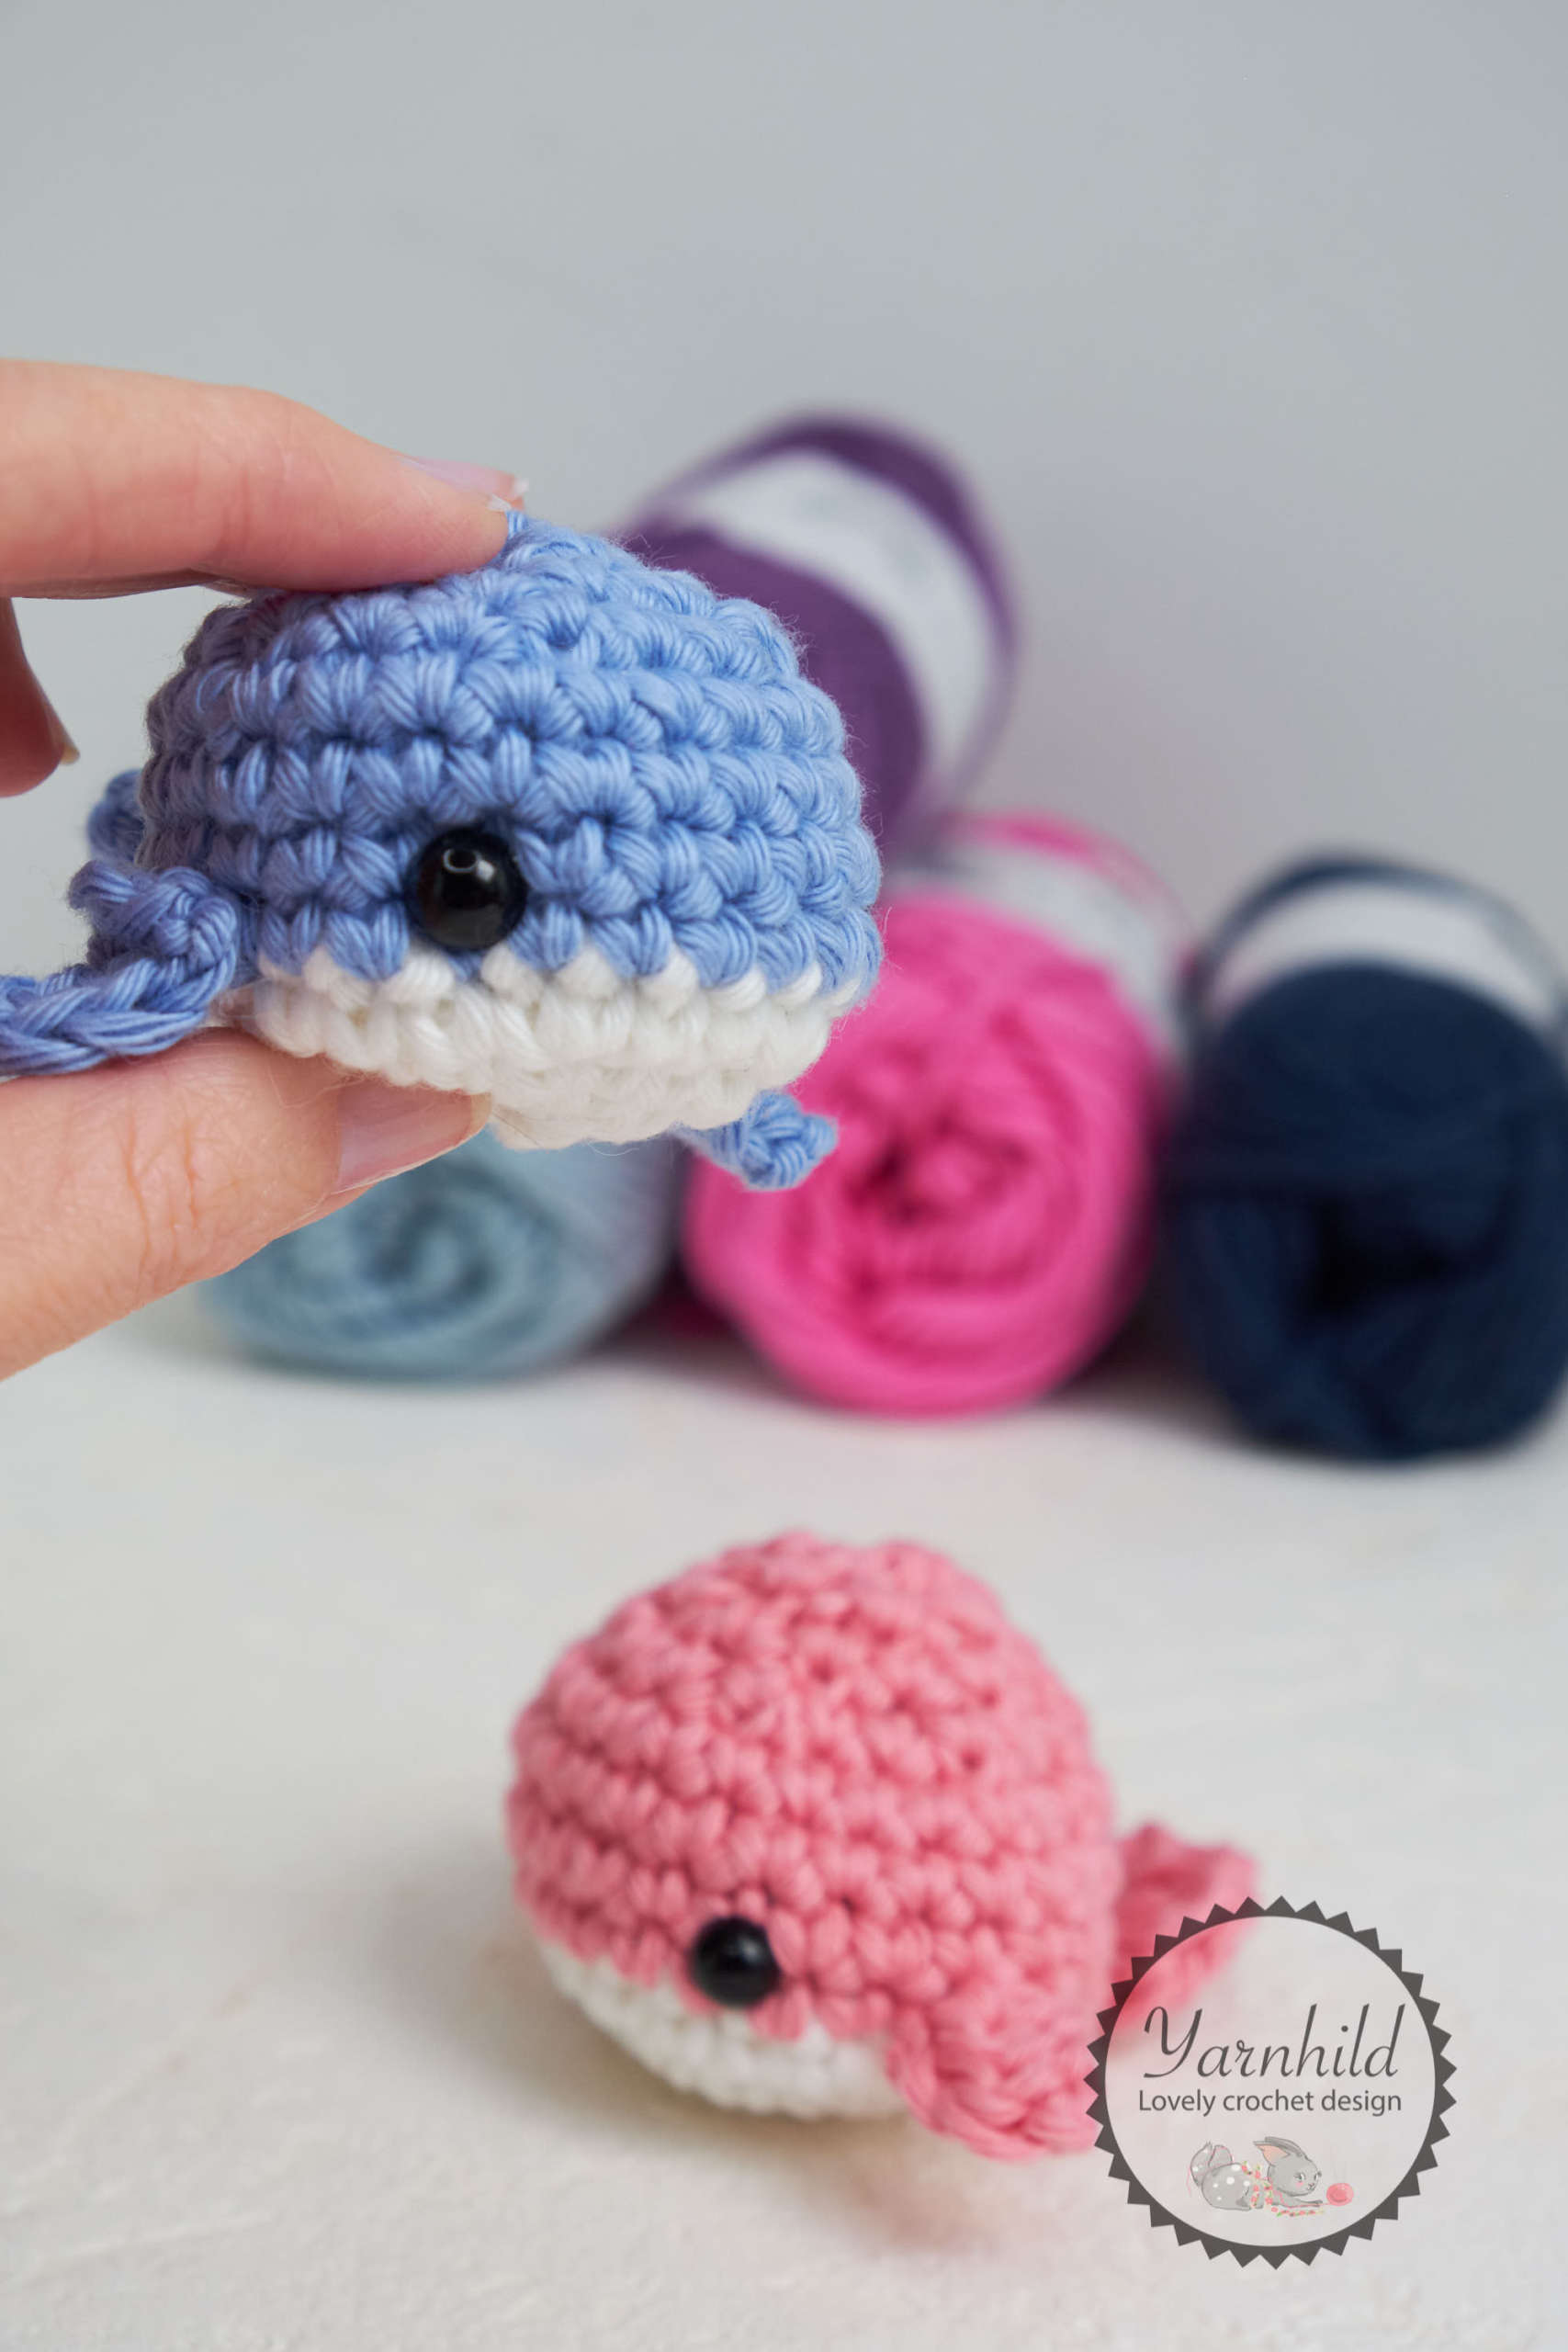 How To Crochet Amigurumi - Best Guide for Beginners